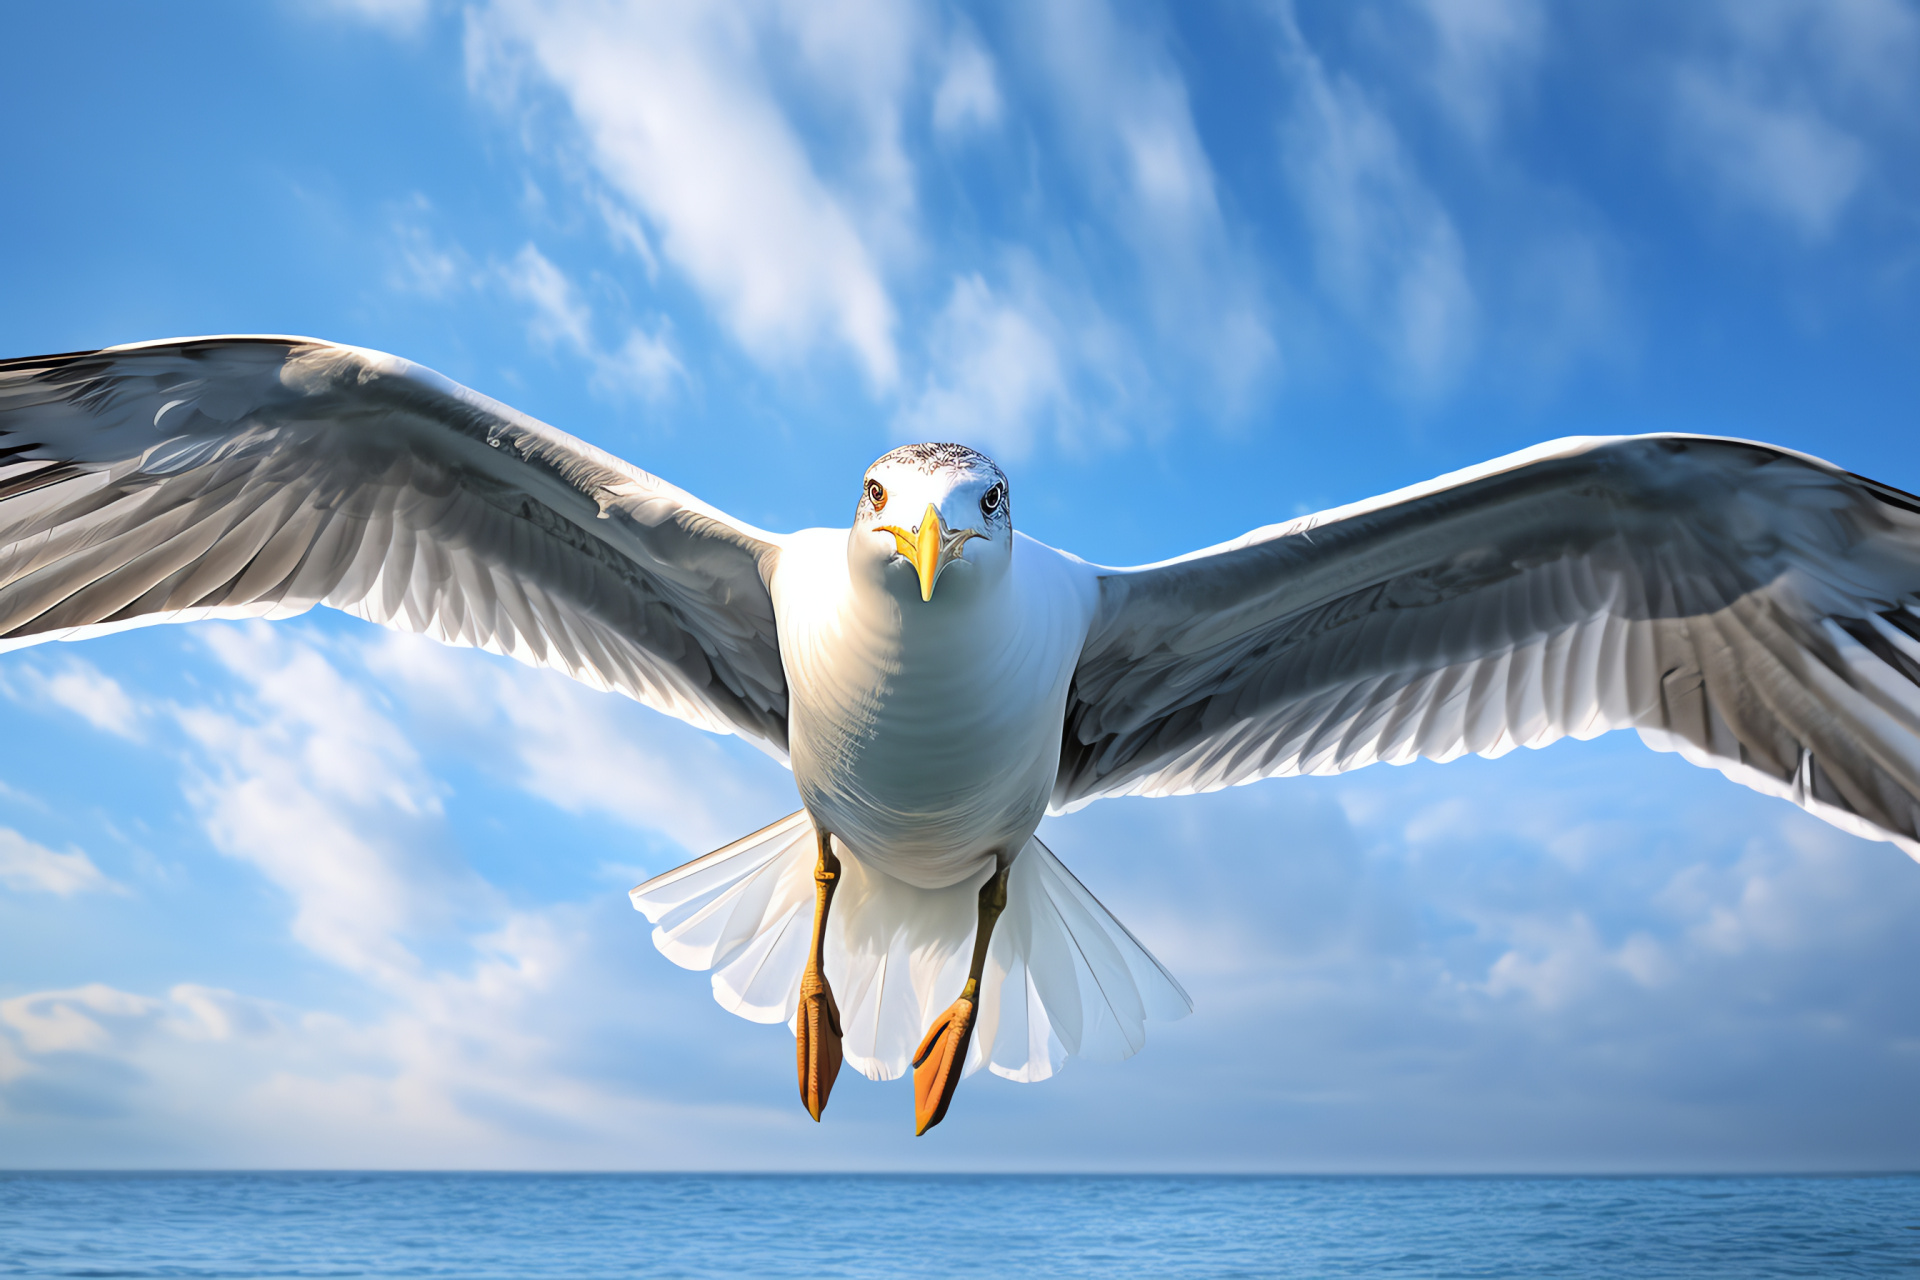 Flying seagull, Bird in flight, Sea bird species, Sky freedom, Oceanic bird, HD Desktop Image